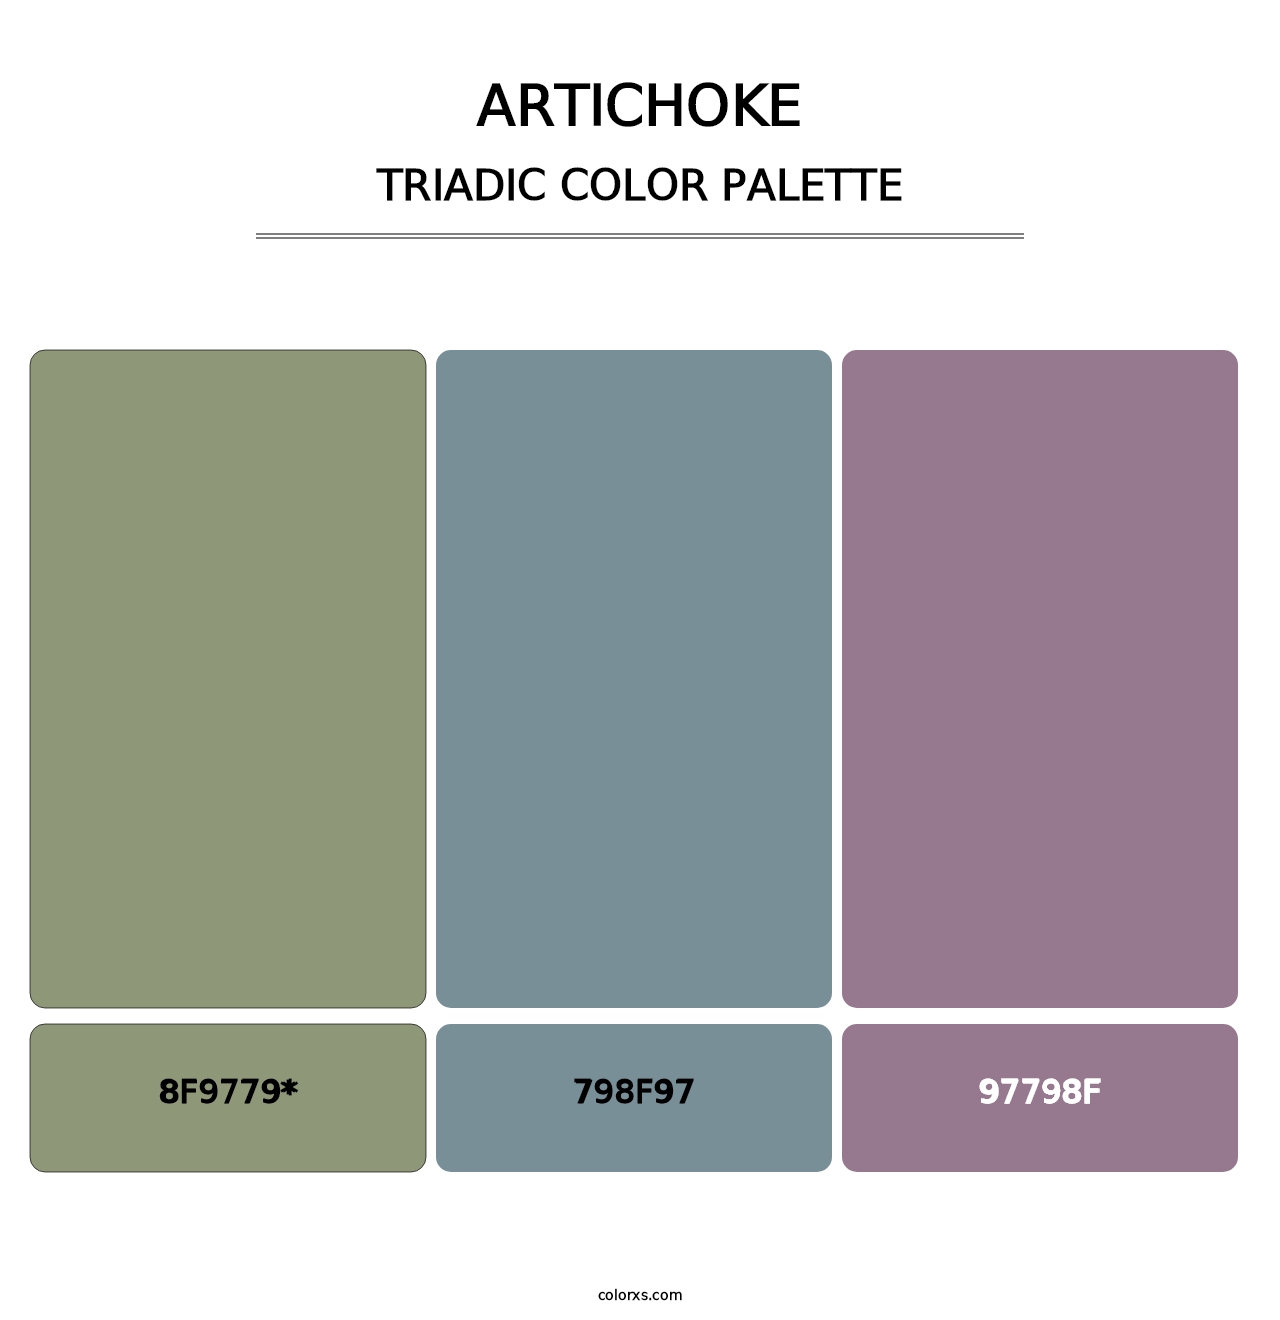 Artichoke - Triadic Color Palette